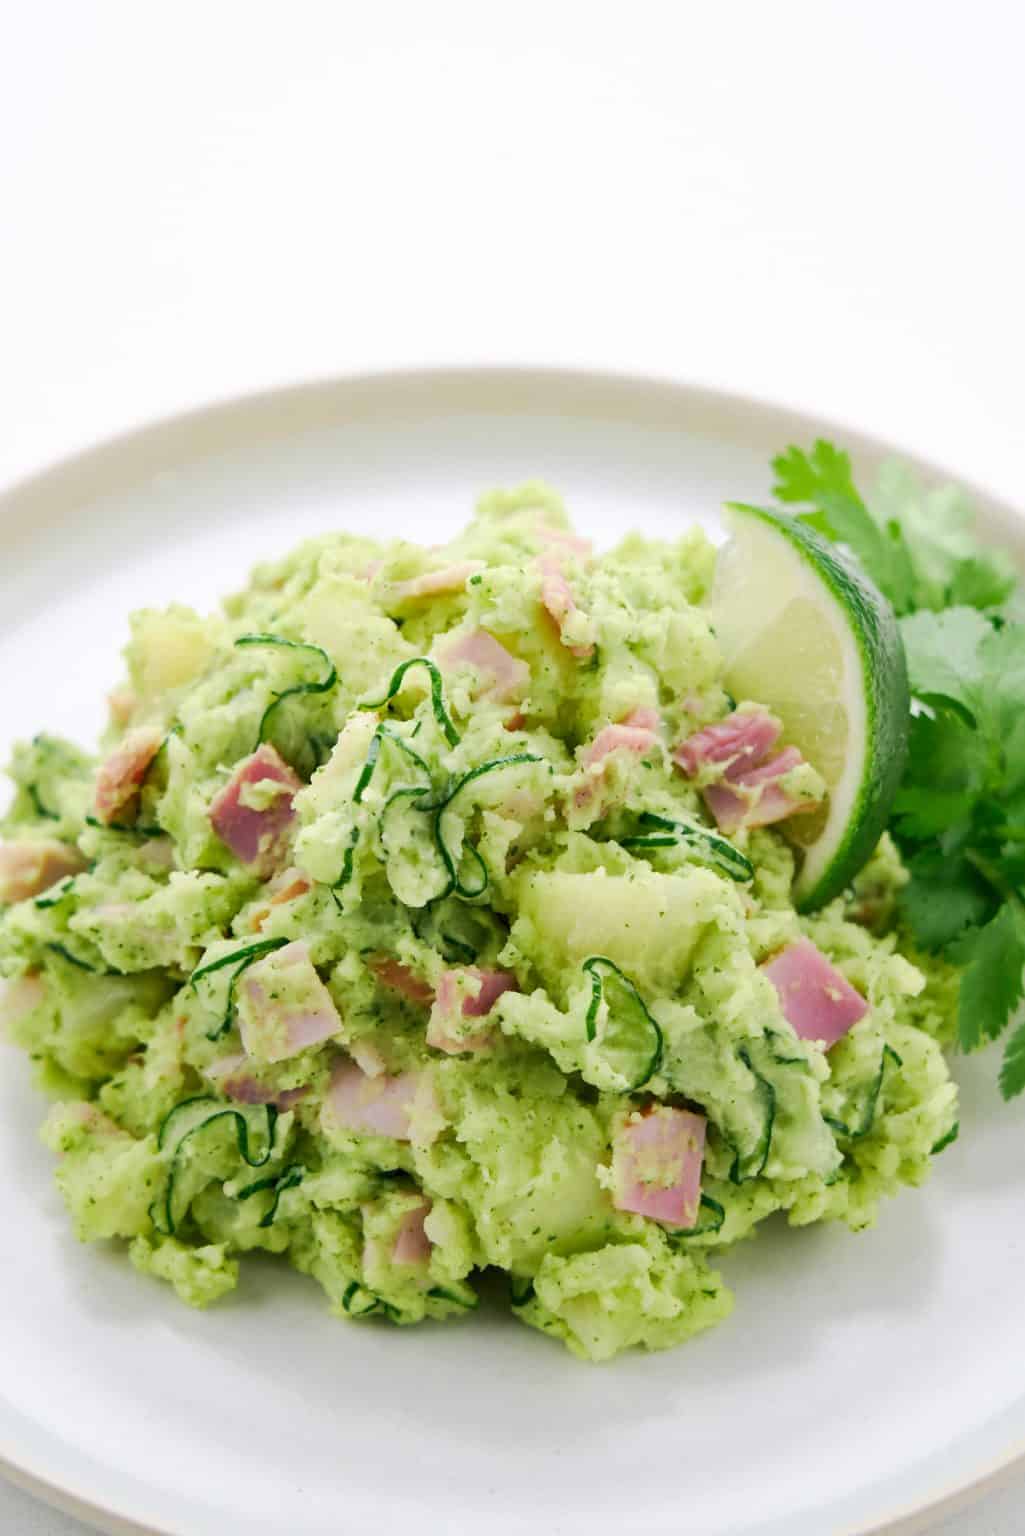 Cilantro Lime Potato Salad